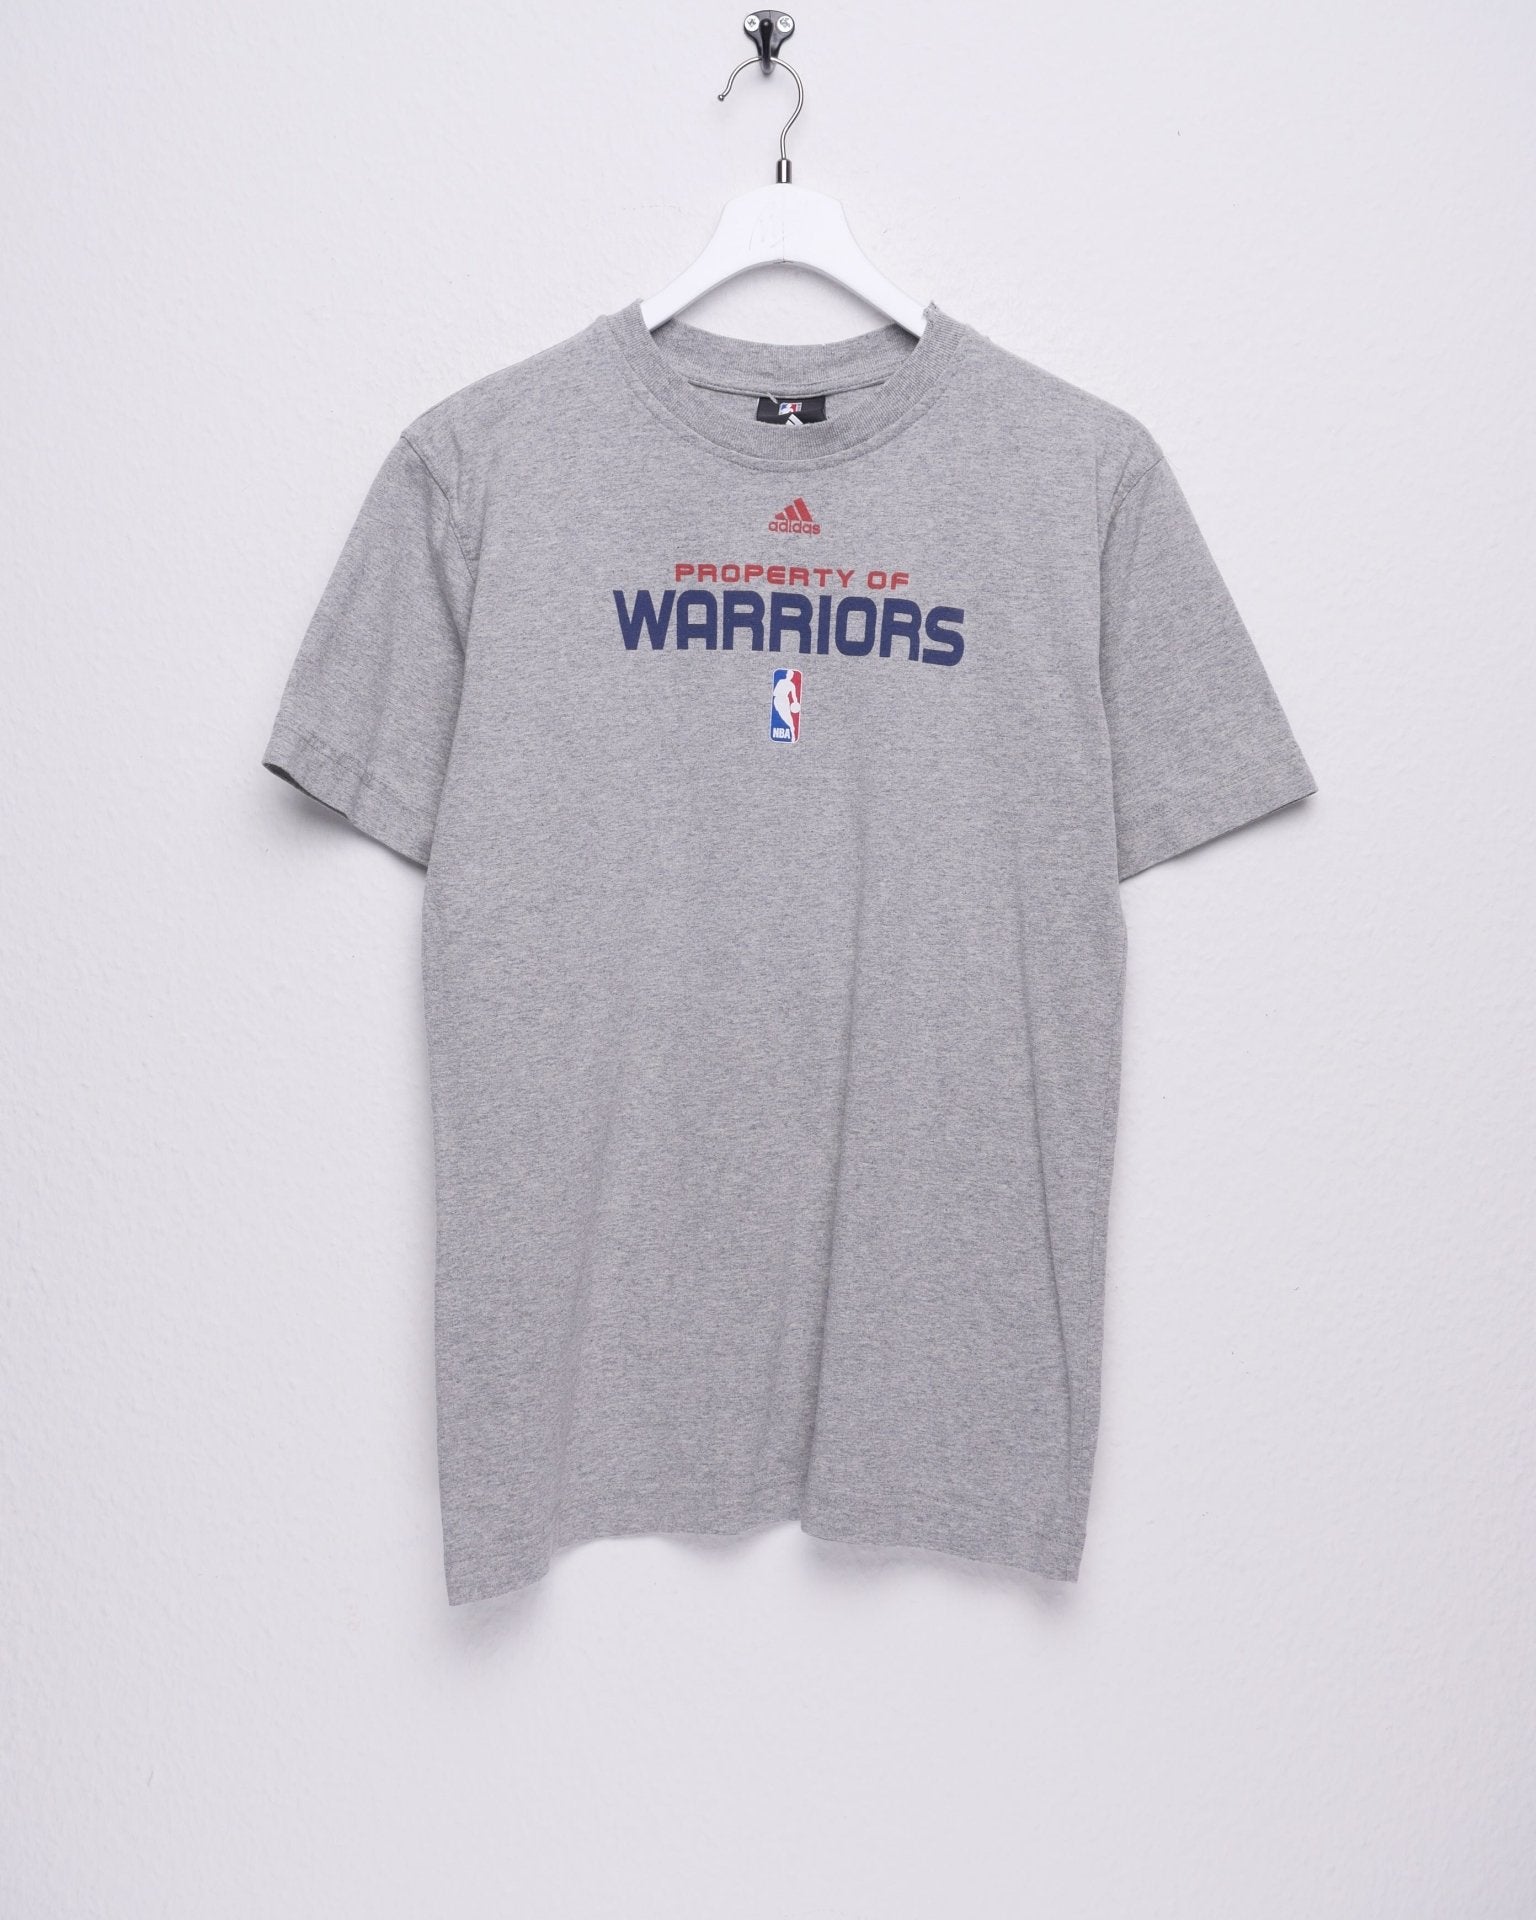 Adidas Property of Warriors printed Spellout grey Shirt - Peeces